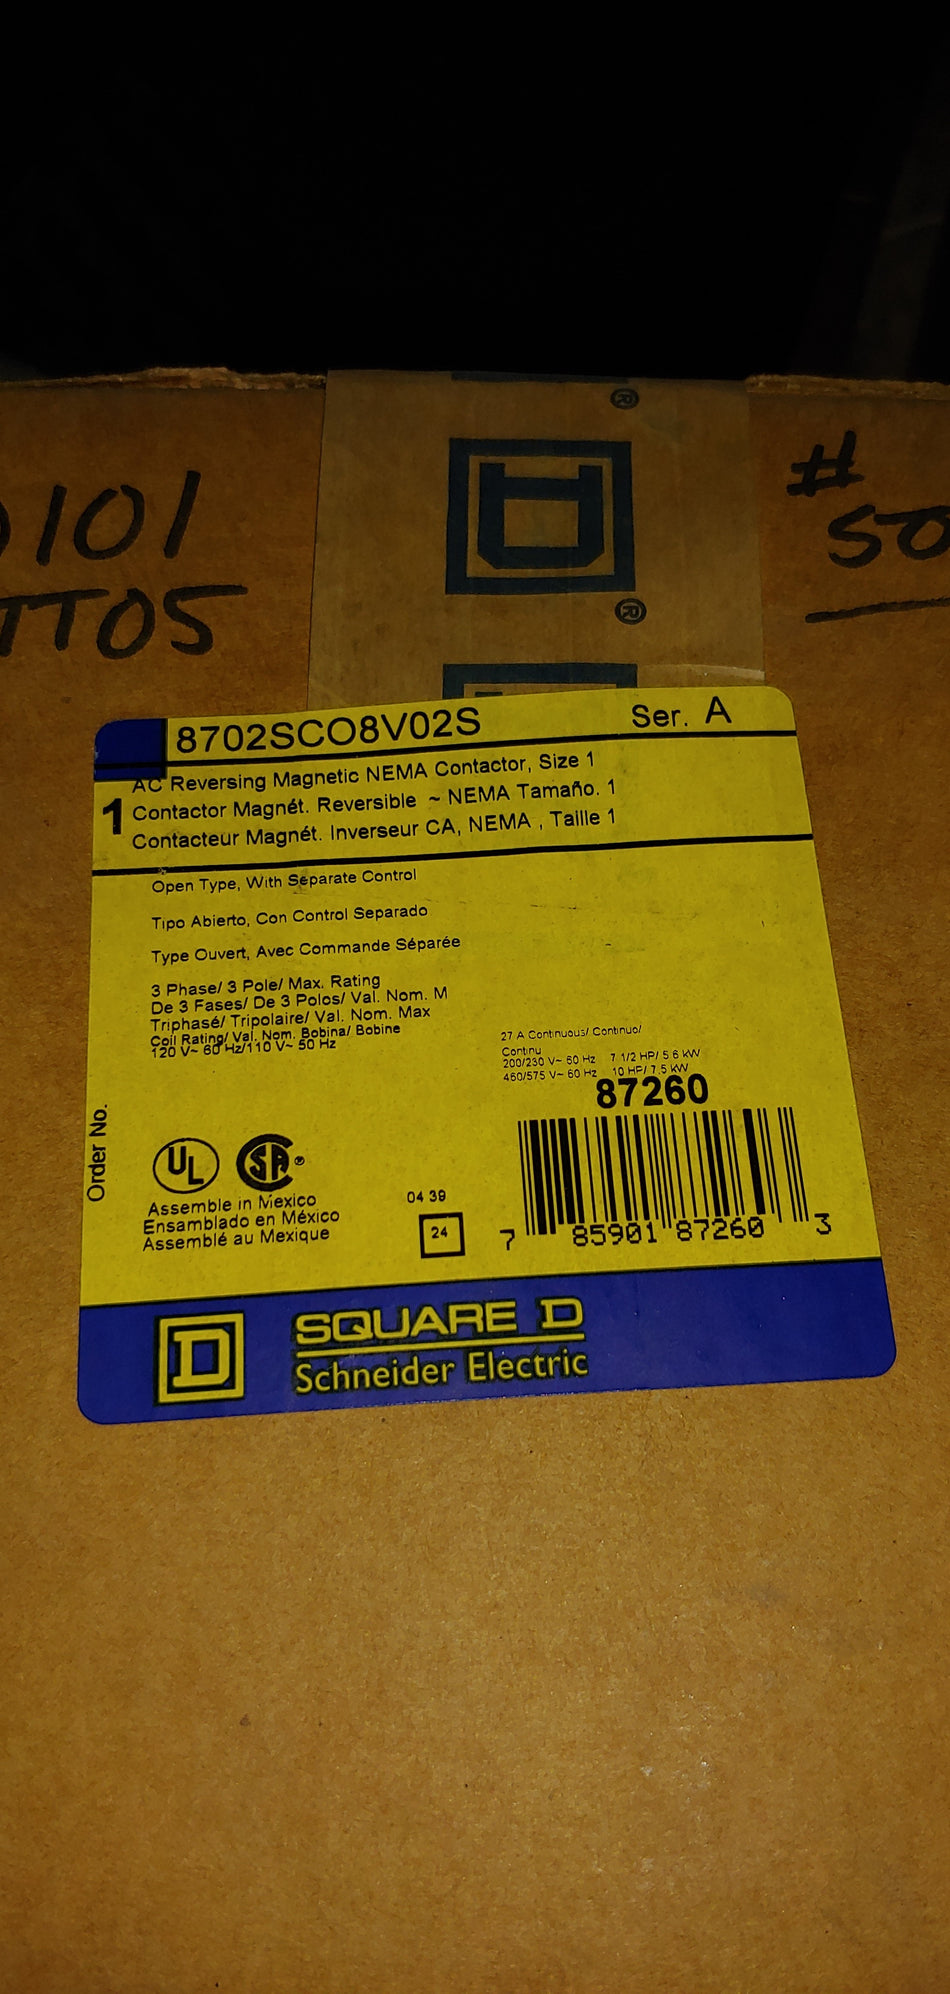 Square D Full Voltage Reversing Contactor, 8502 SCO2V02S, 27Amp, 600VAC, NEMA size 1